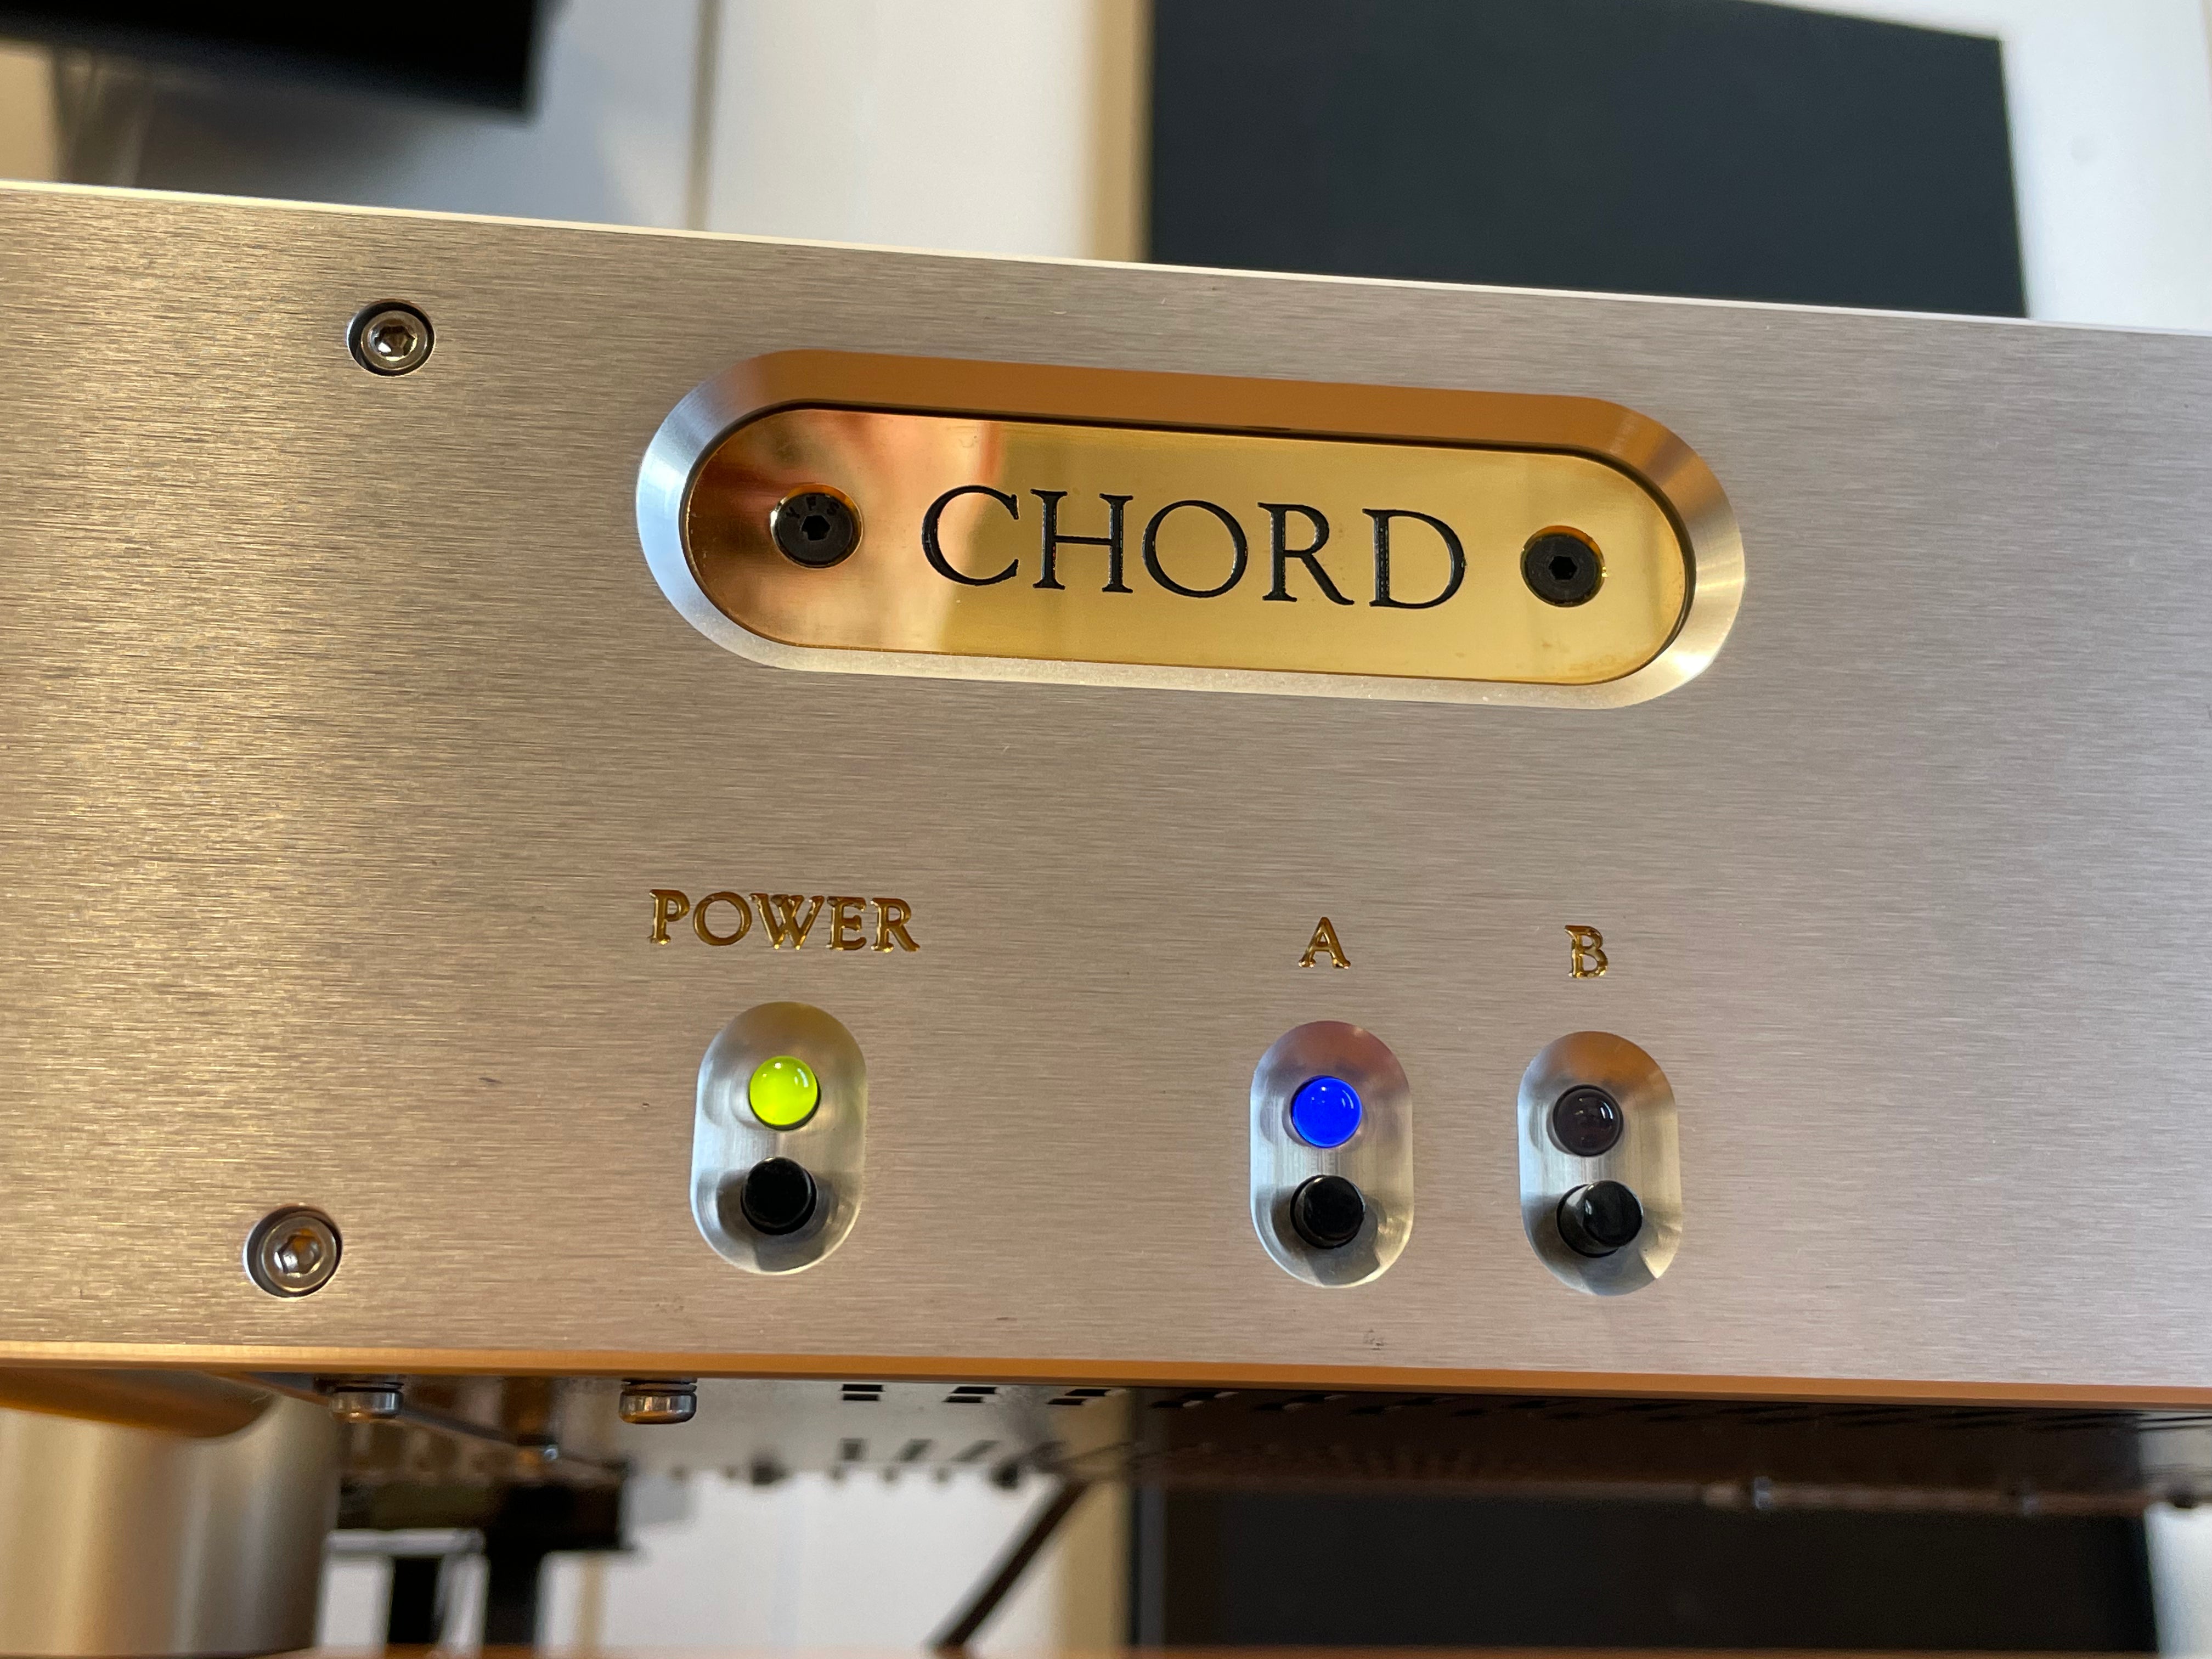 Chord SPM 600 - The Choice of Abbey Road Studios